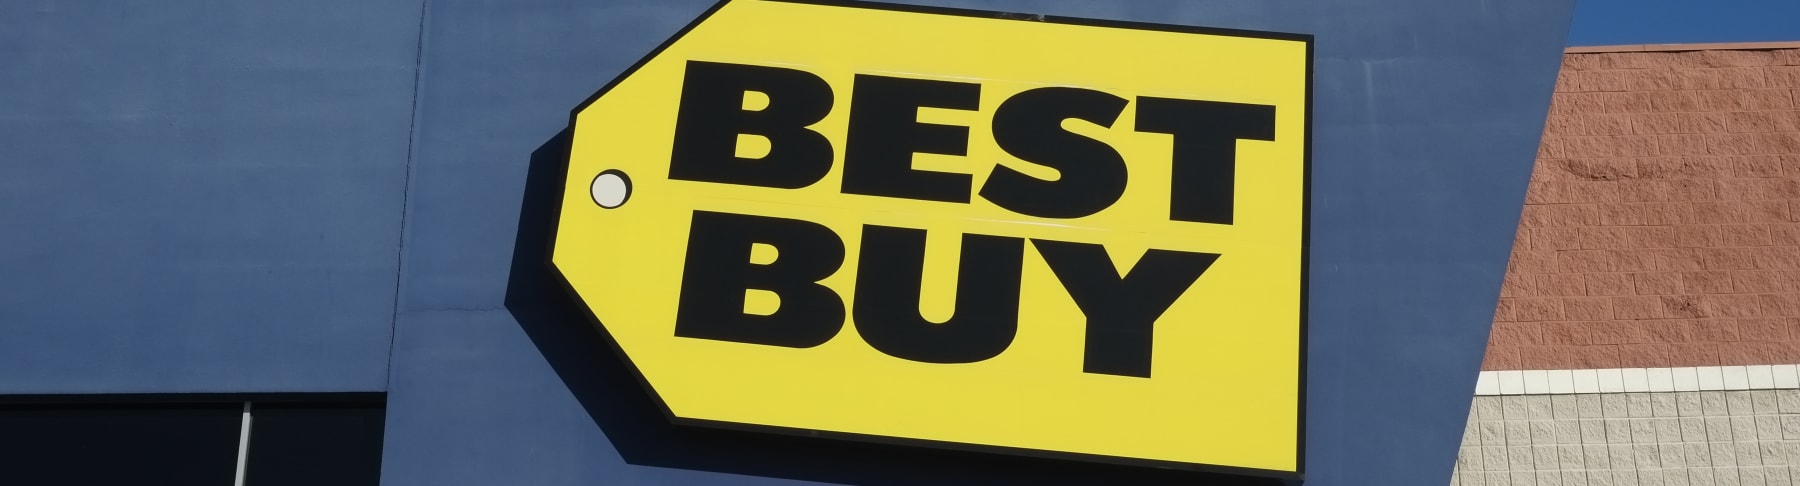 Yellow Best Buy sign hangs on store's exterior.